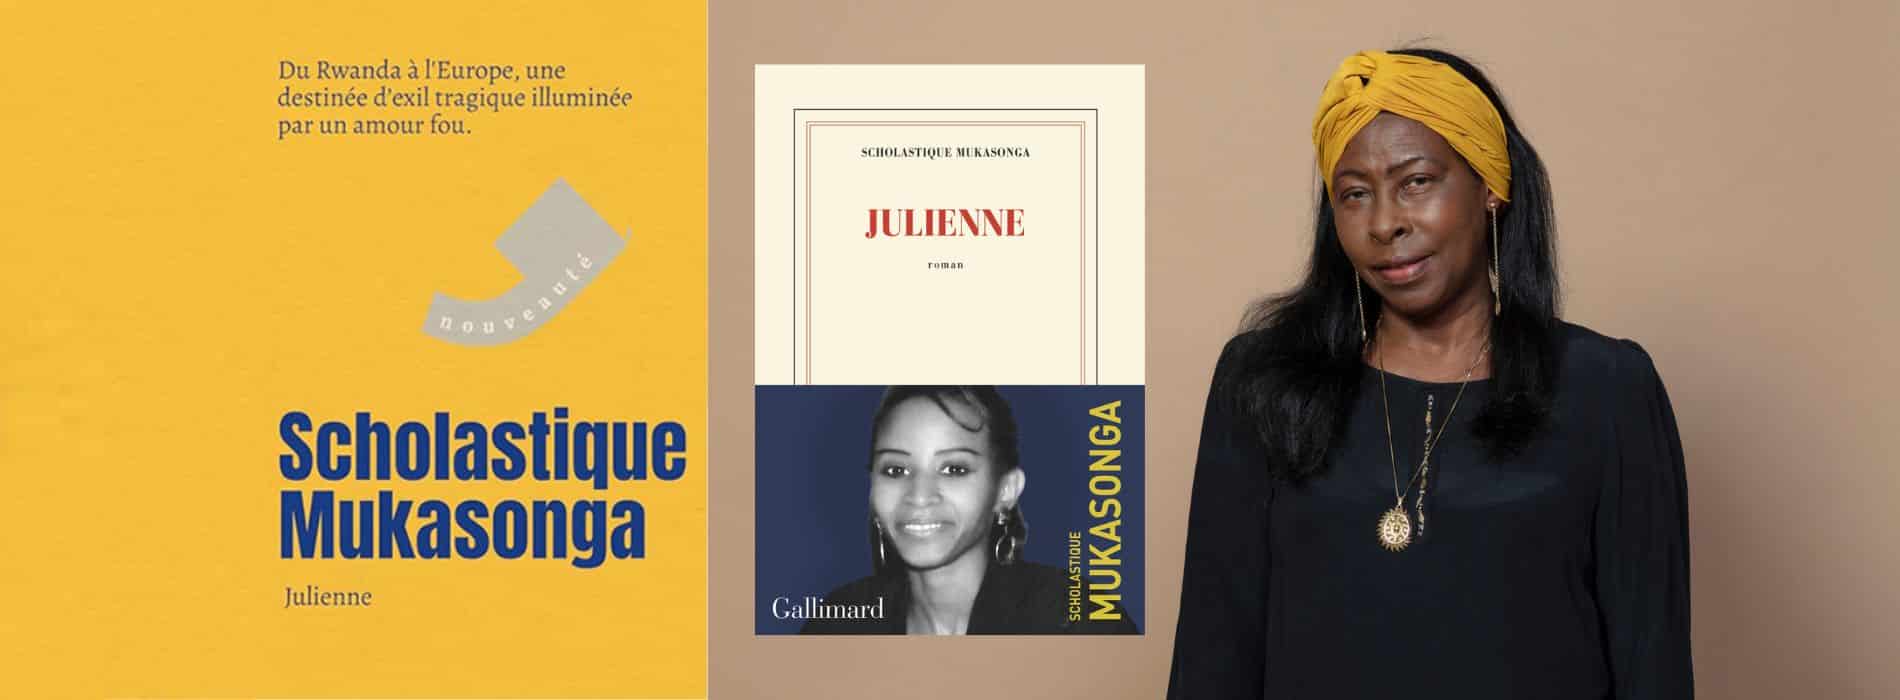 Julienne par Scholastique Mukasonga - Gallimard Rwanda